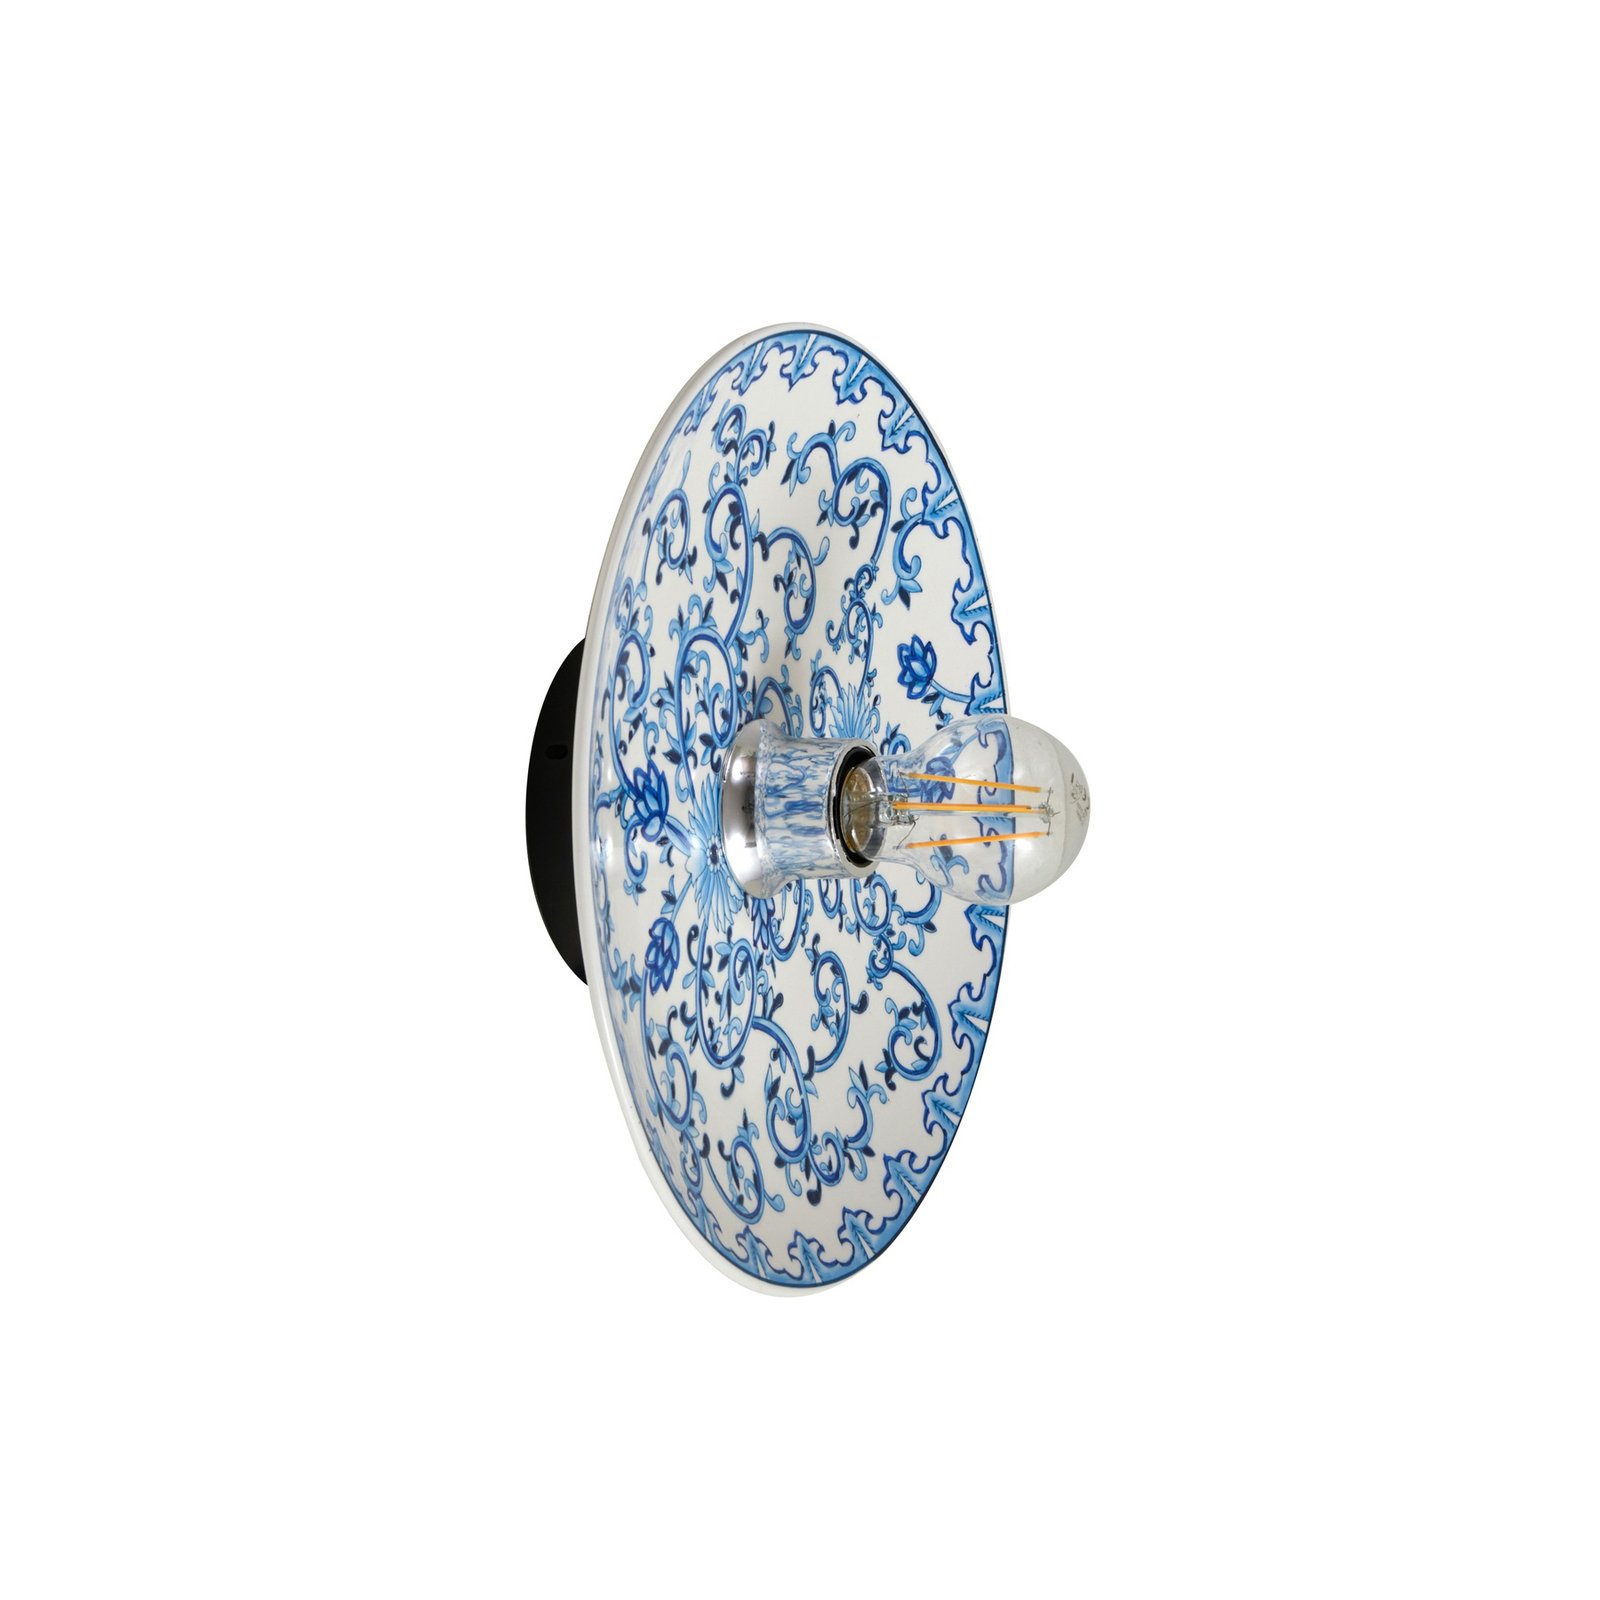 Lucande vägglampa Faelira, blå/vit, keramik